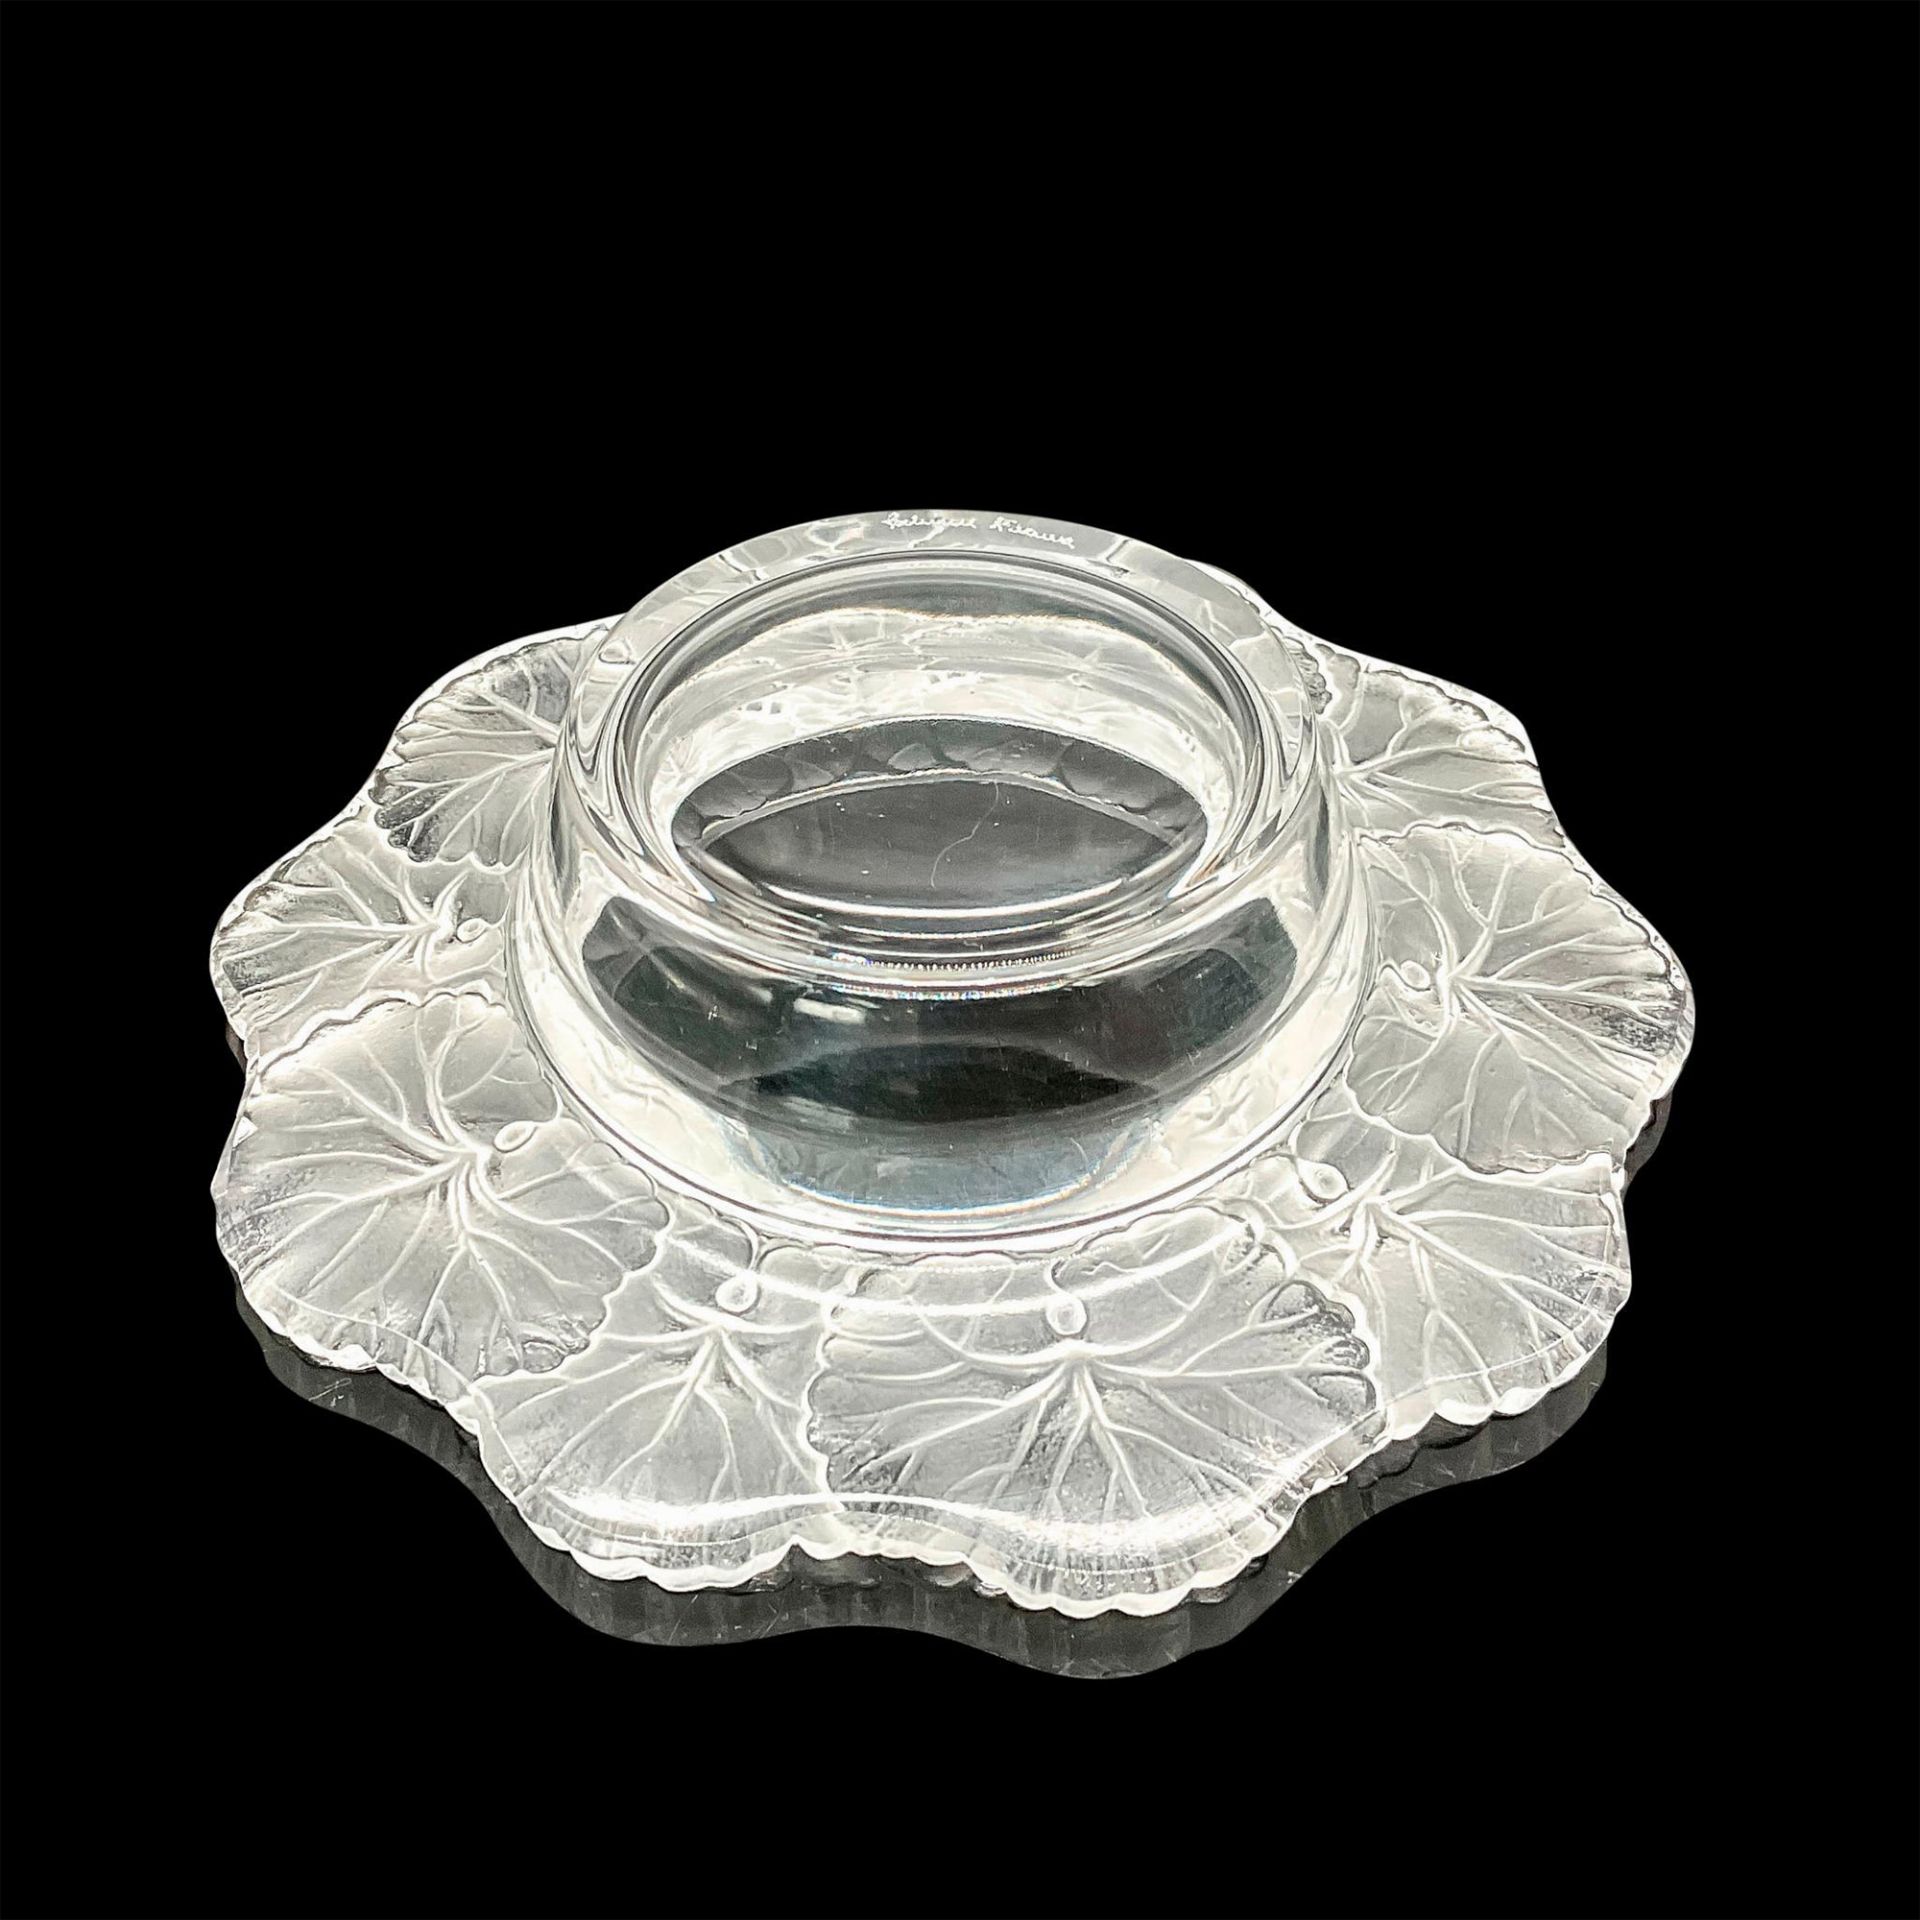 Lalique Crystal Honfleur Geranium Bowl or Dish - Image 3 of 3